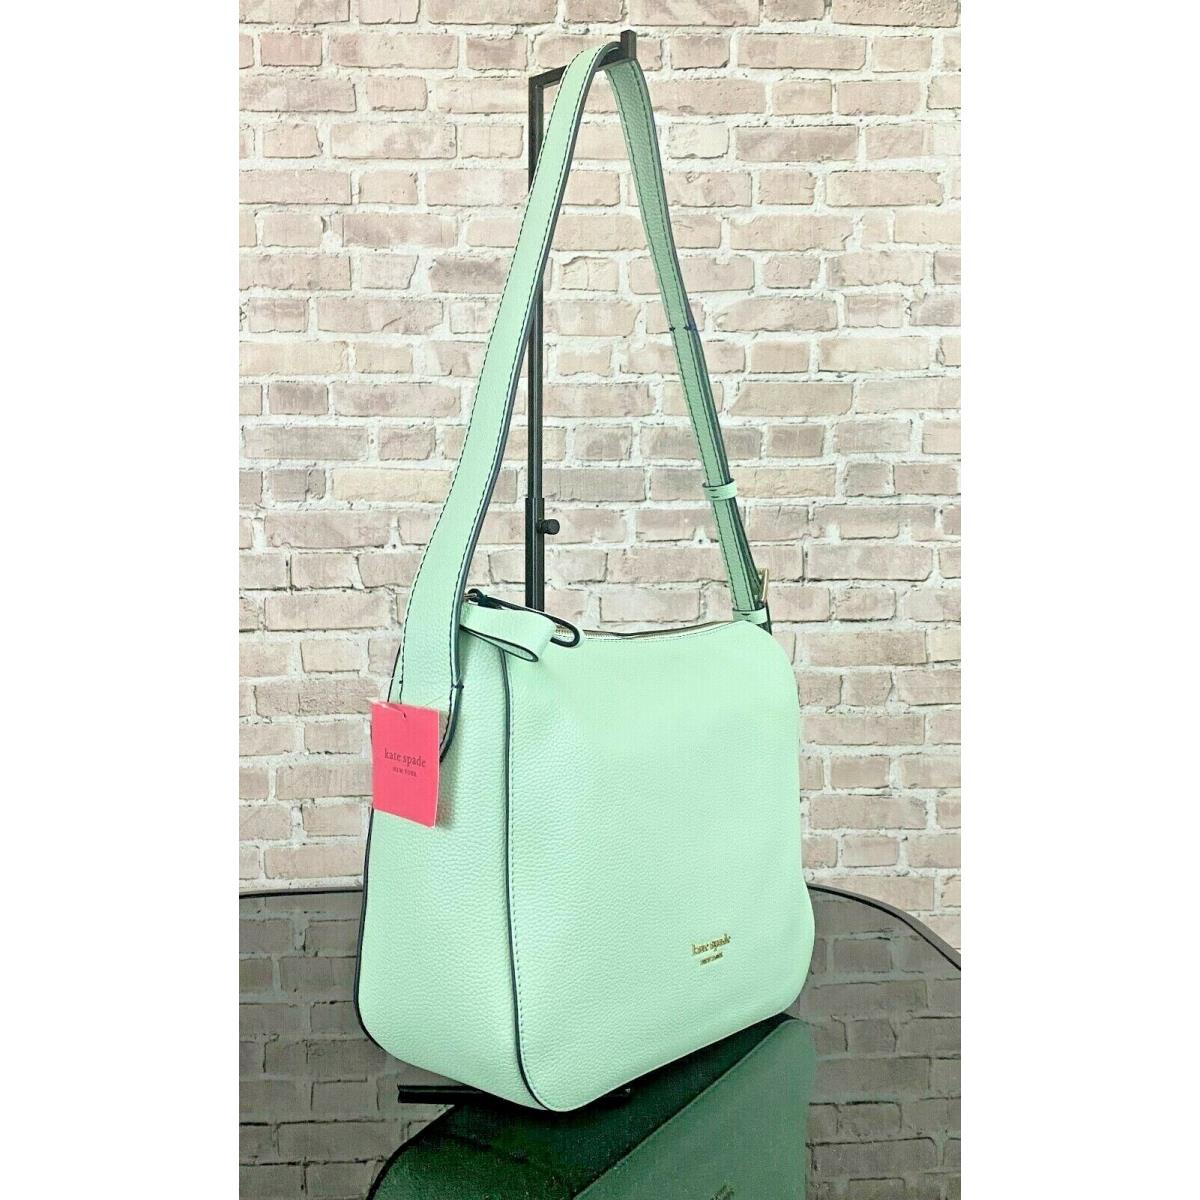 Discolored & Scratched Mint Green Kate Spade Shoulder Bag for Repair | eBay